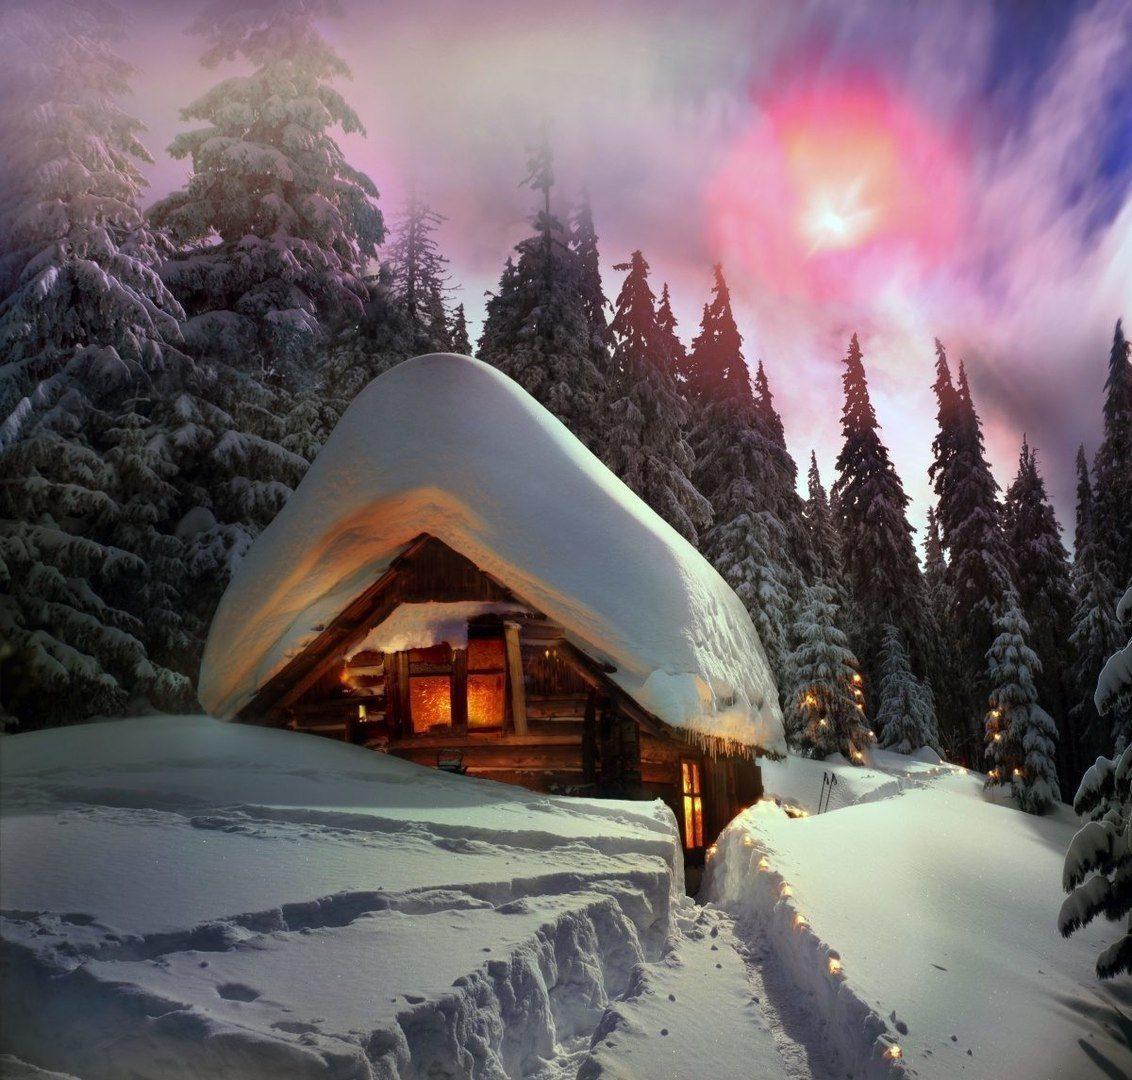 Домик, Михаил Бровкин- картина, зима, домик в деревне, березки, пейзаж